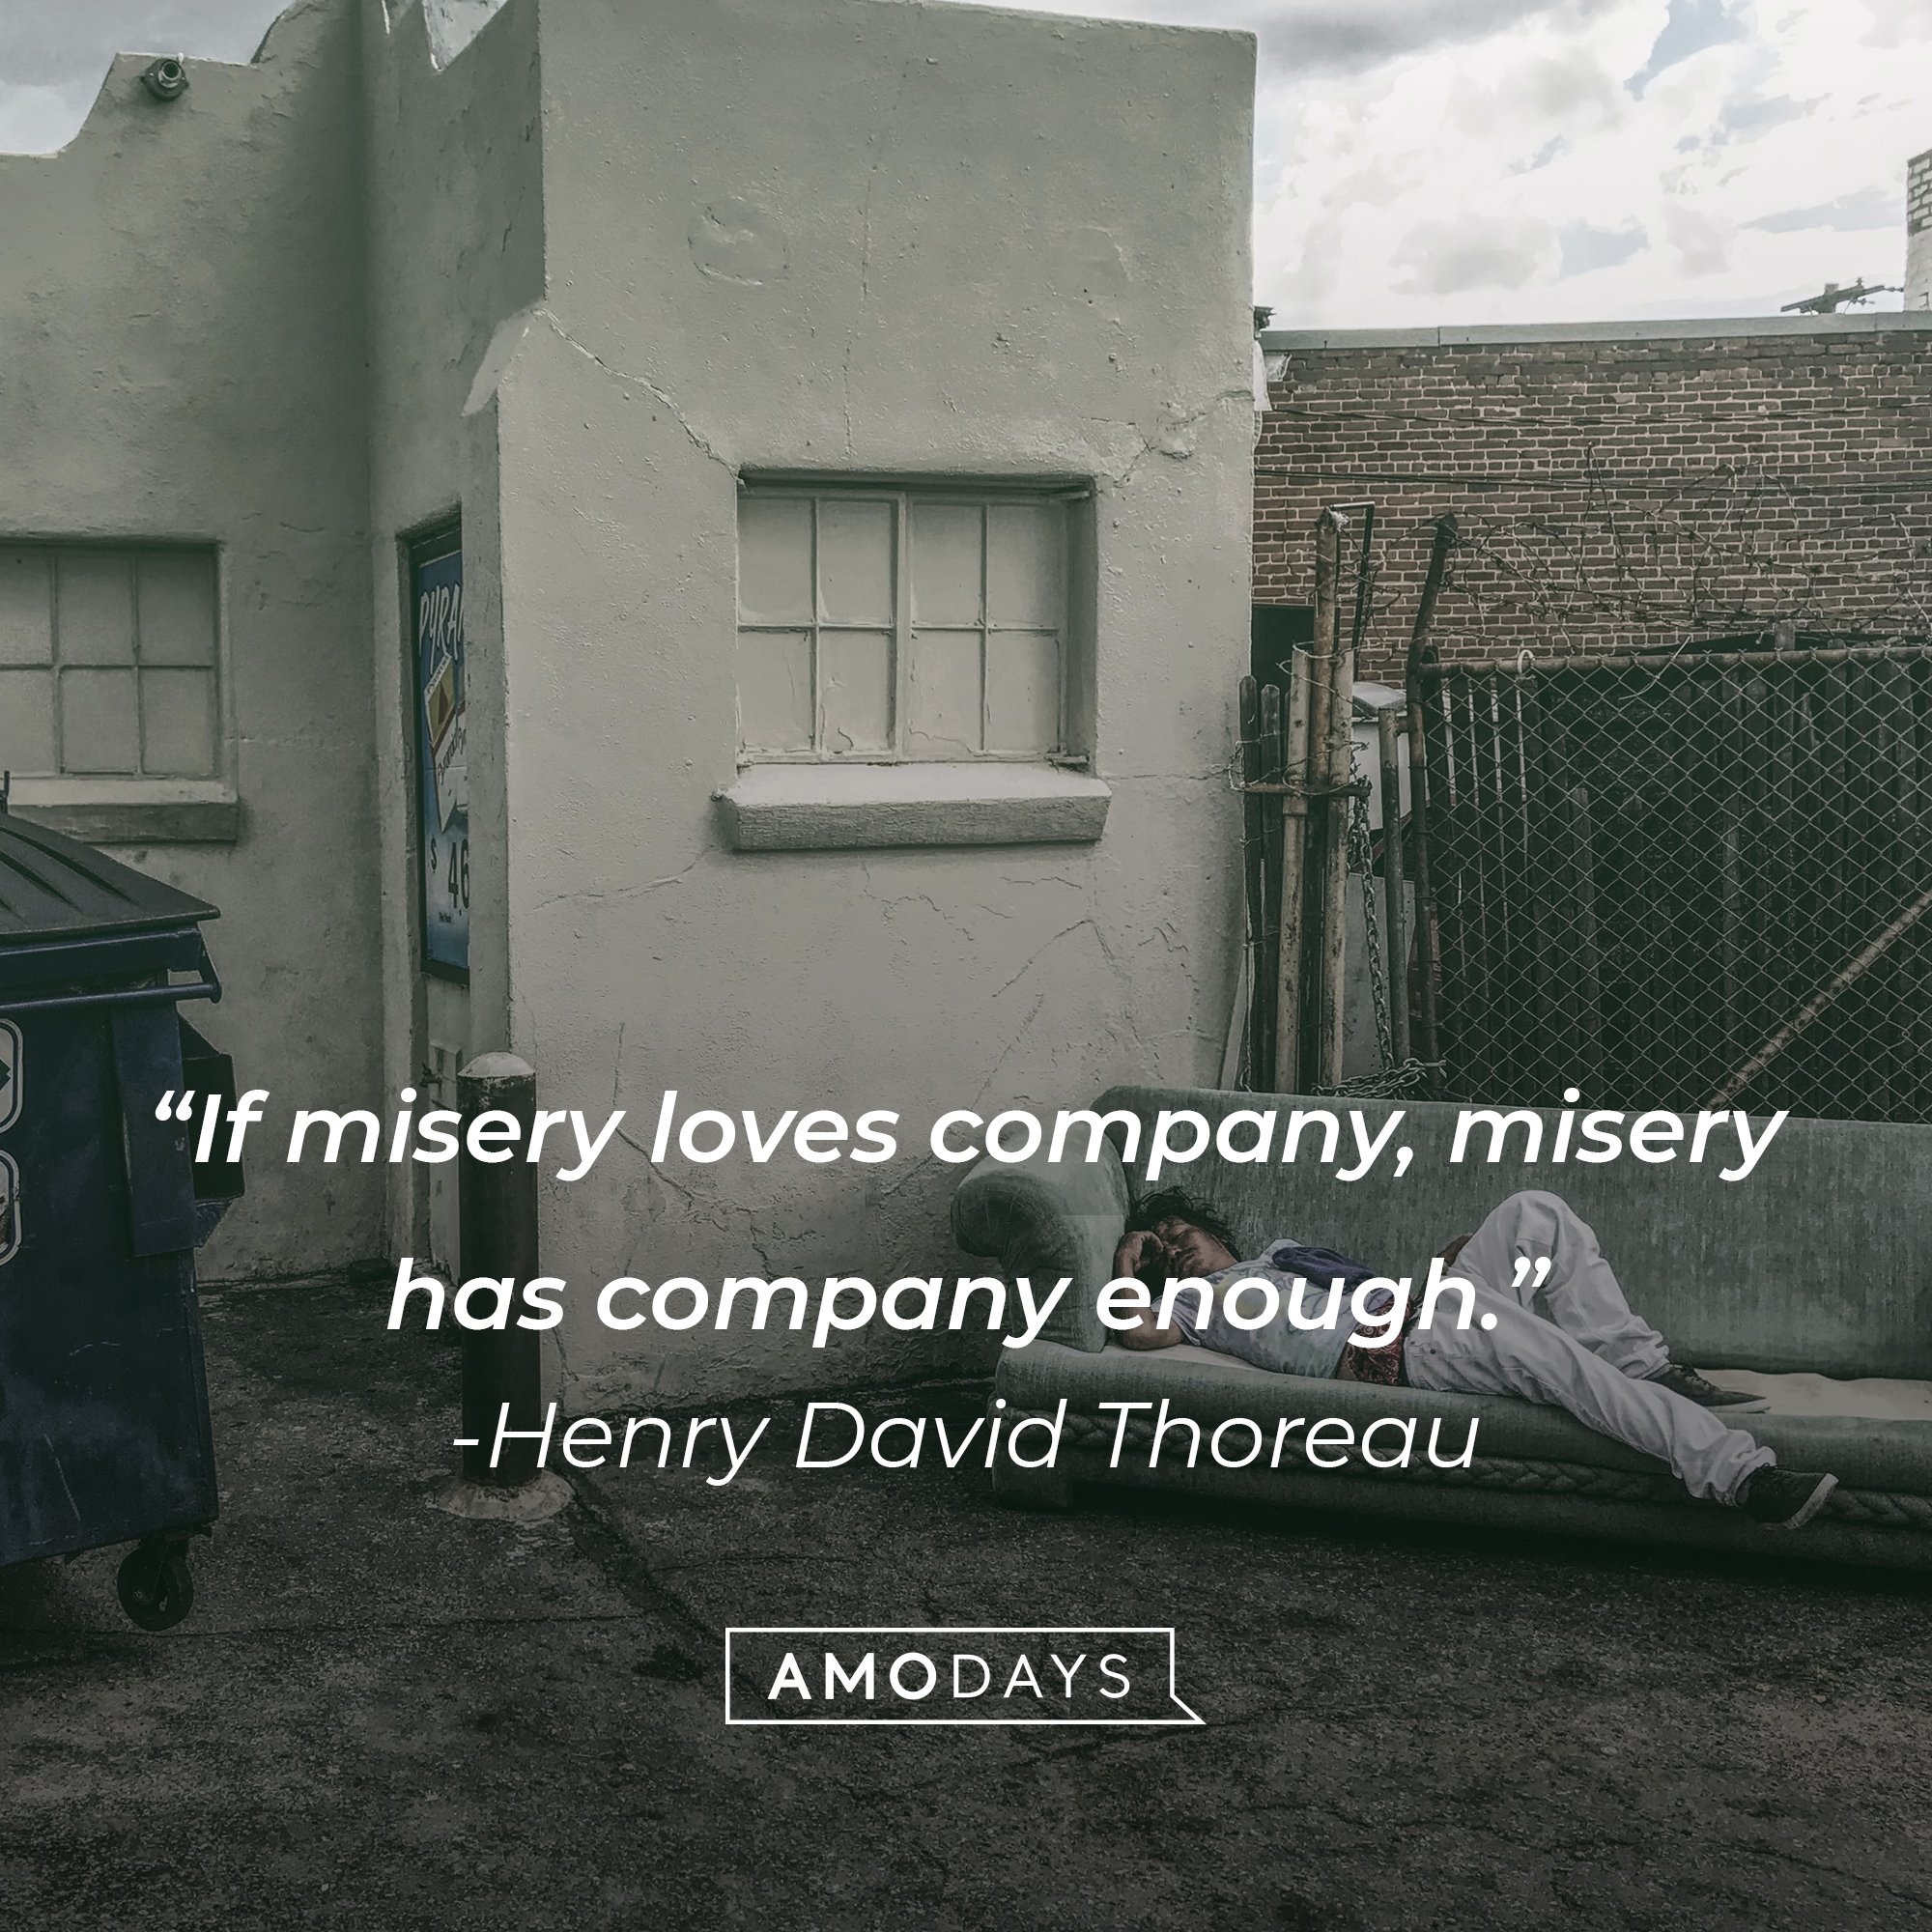 Henry David Thoreau’s quote: "If misery loves company, misery has company enough." | Image: AmoDays